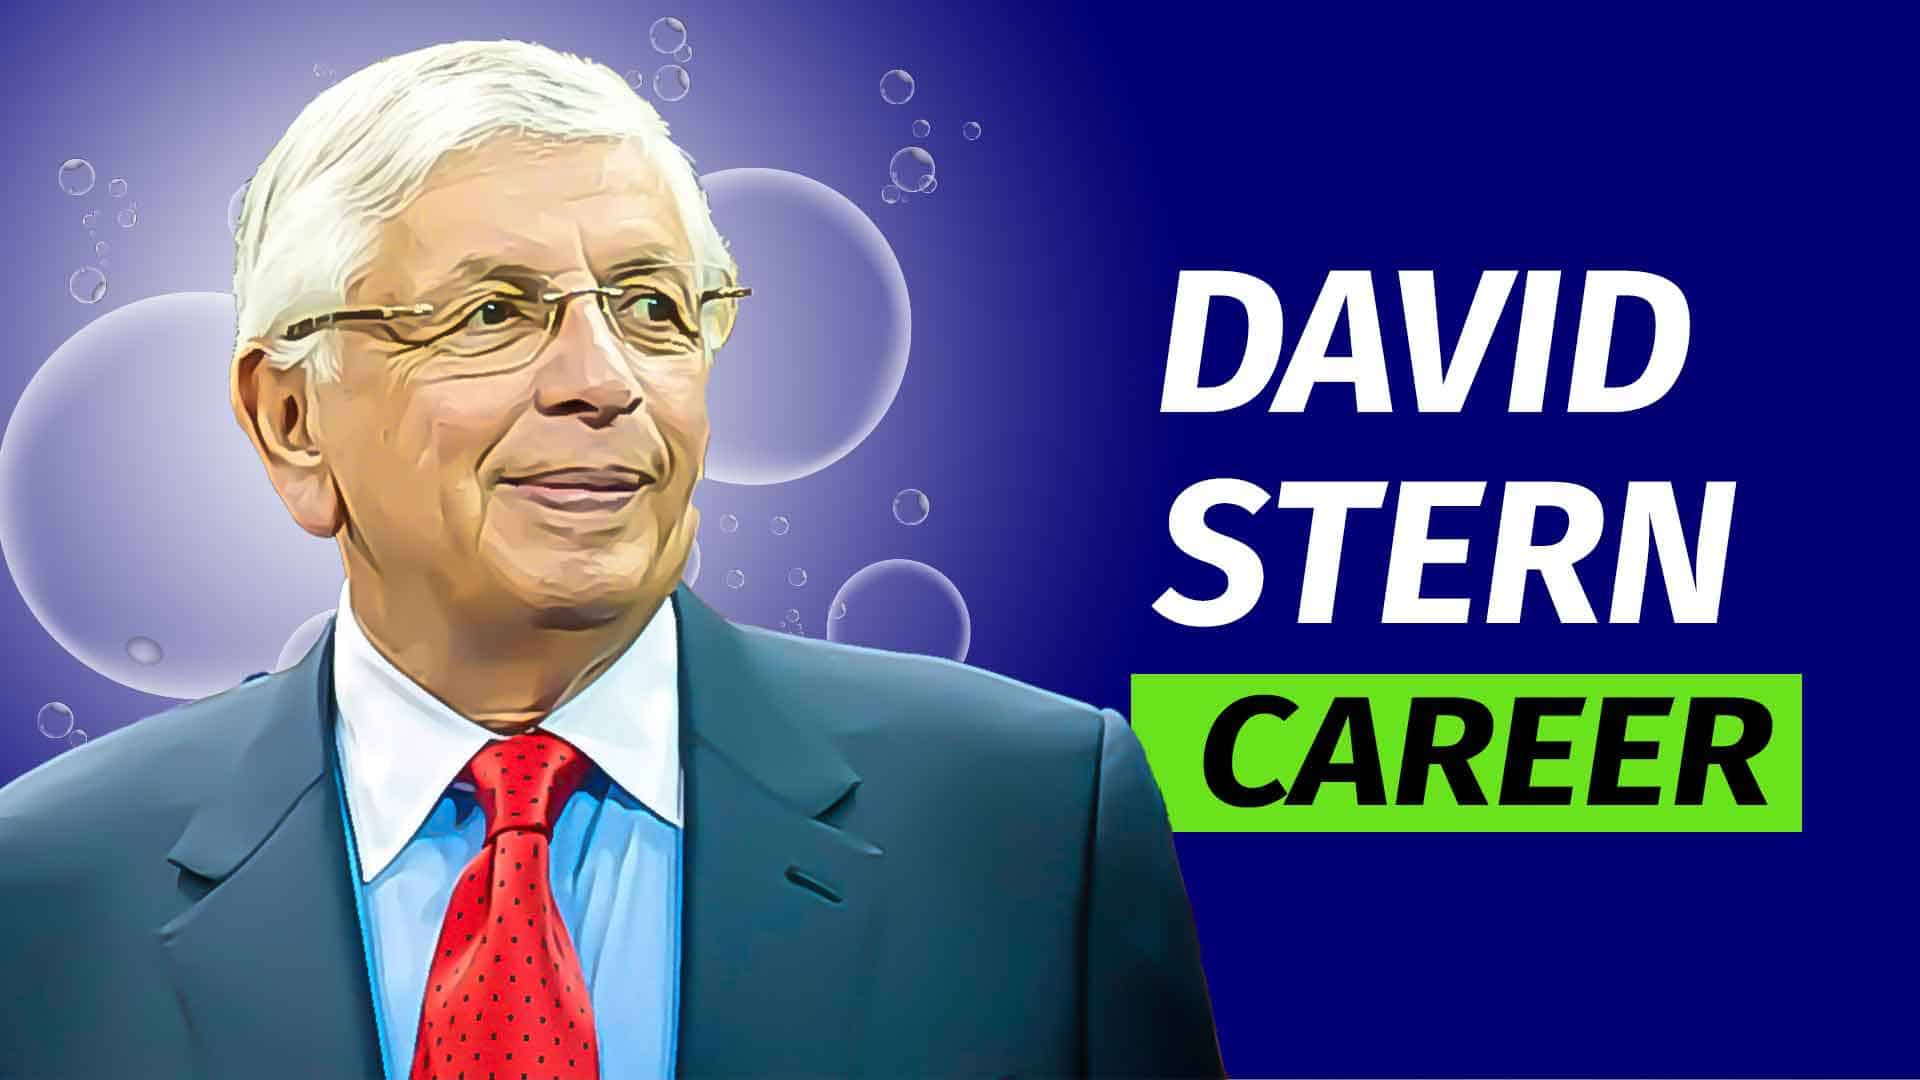 David Stern career